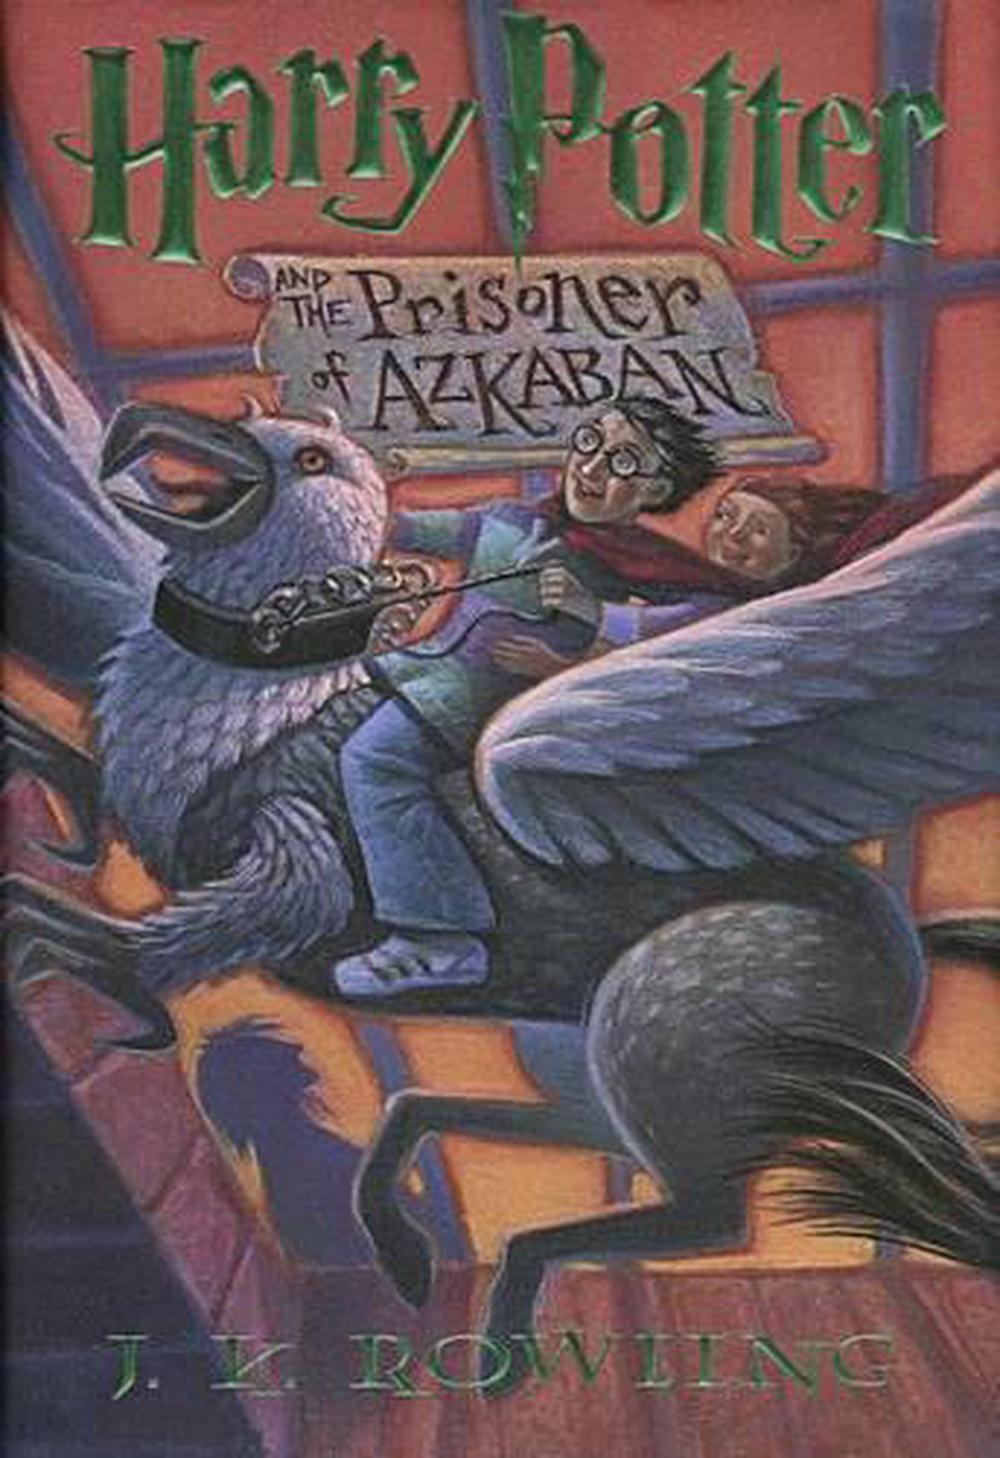 jk rowling harry potter and the prisoner of azkaban